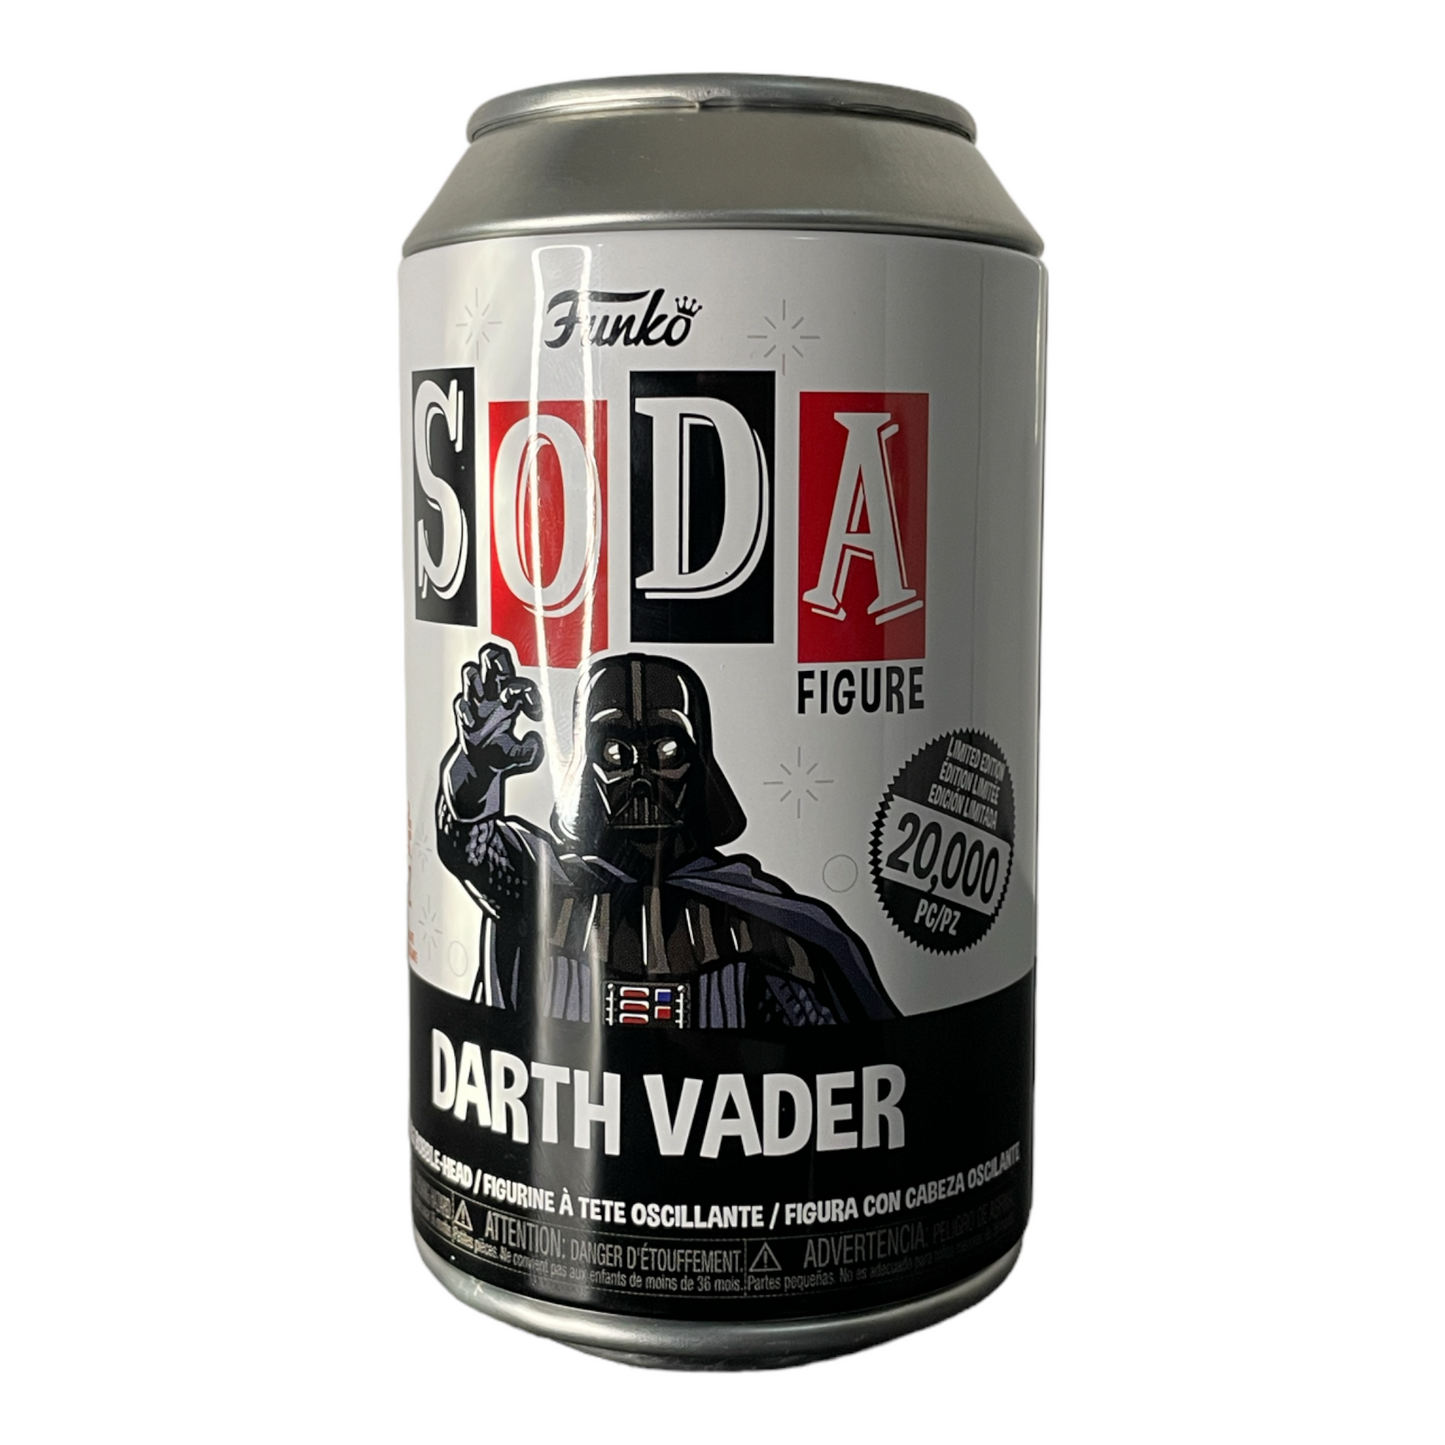 Darth Vader (common)